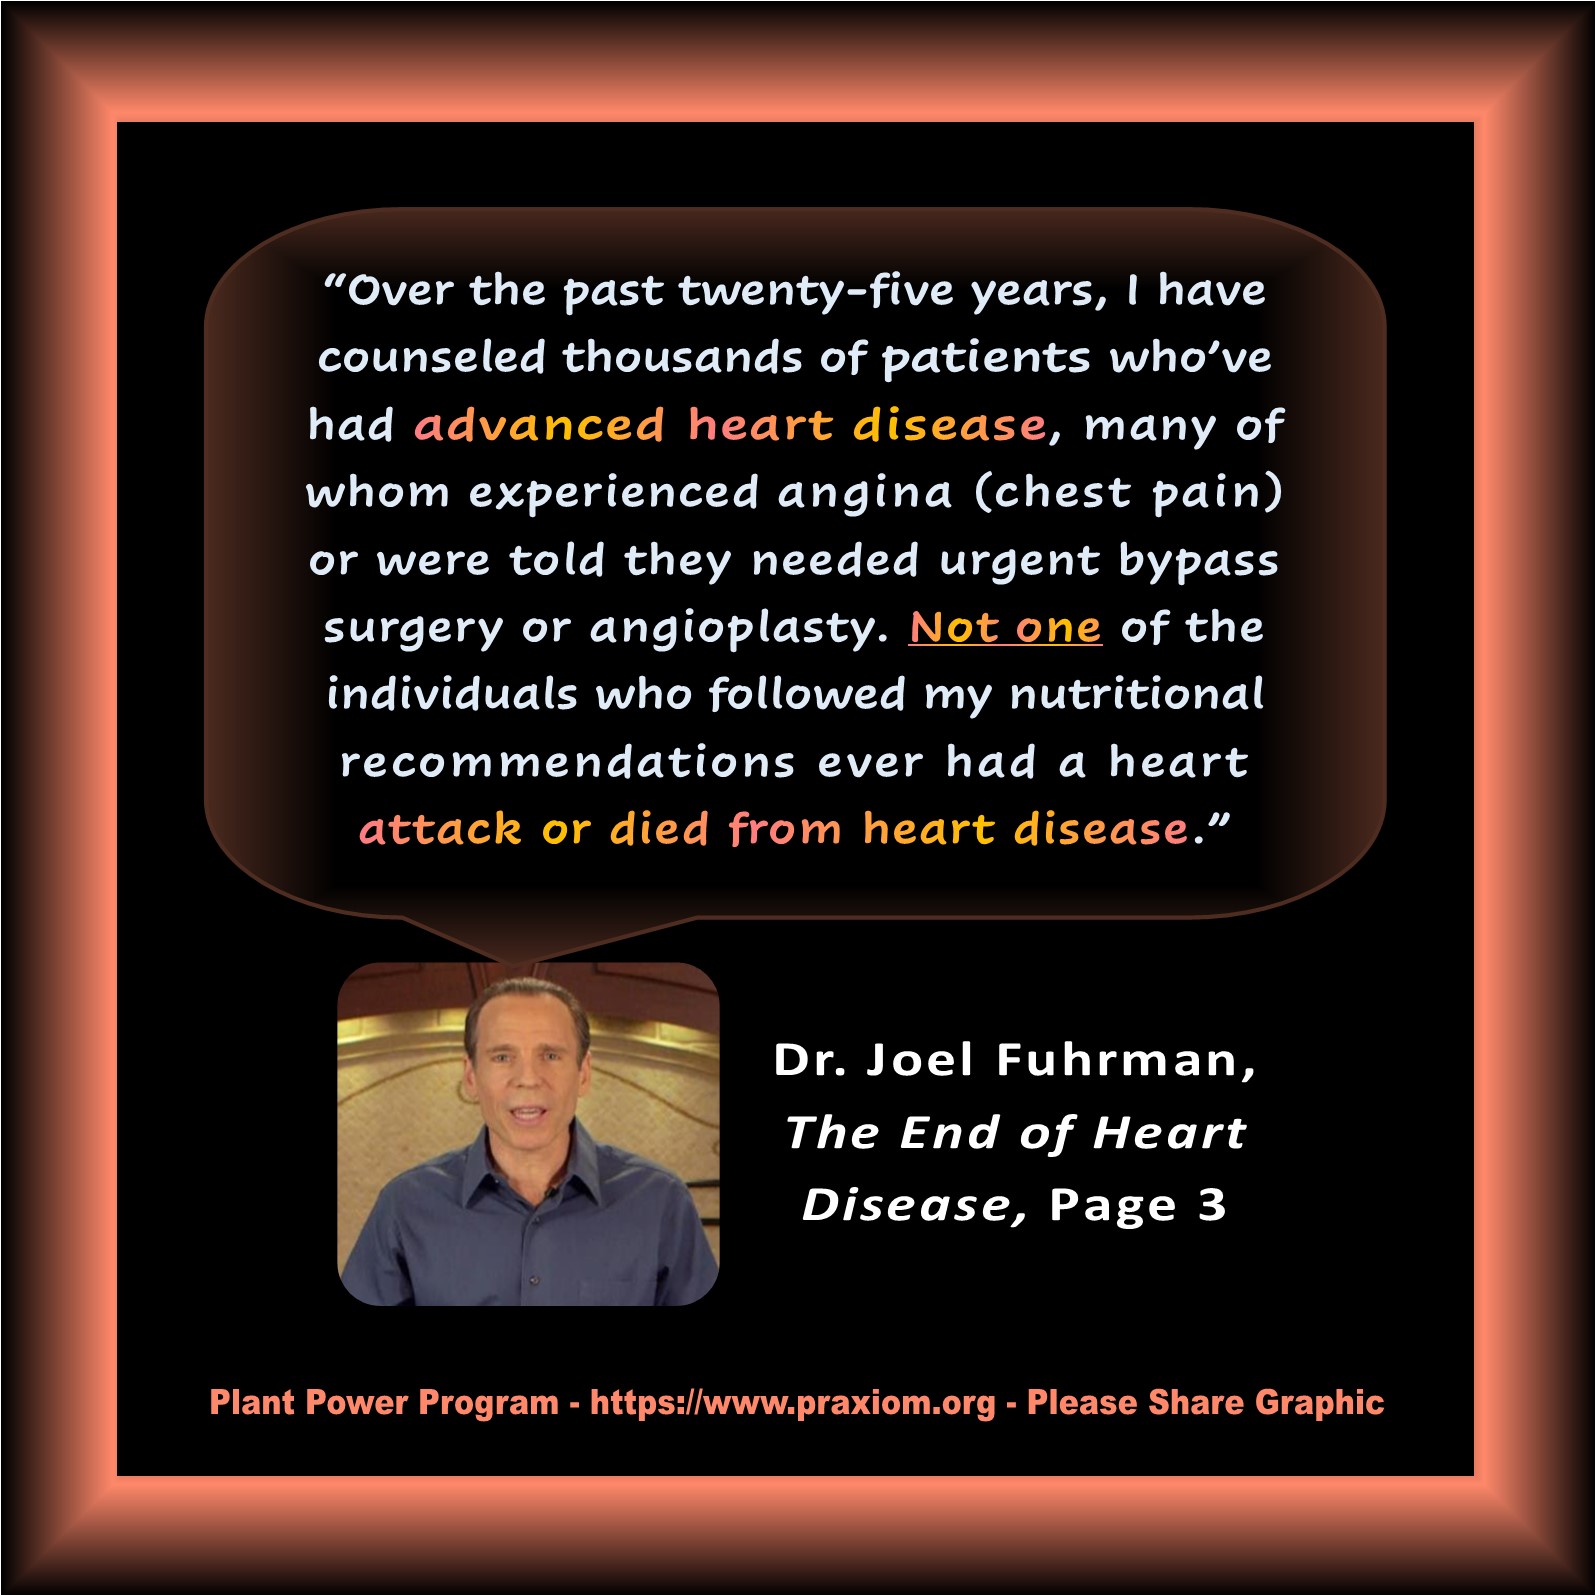 The End of Heart Disease - Dr. Joel Fuhrman